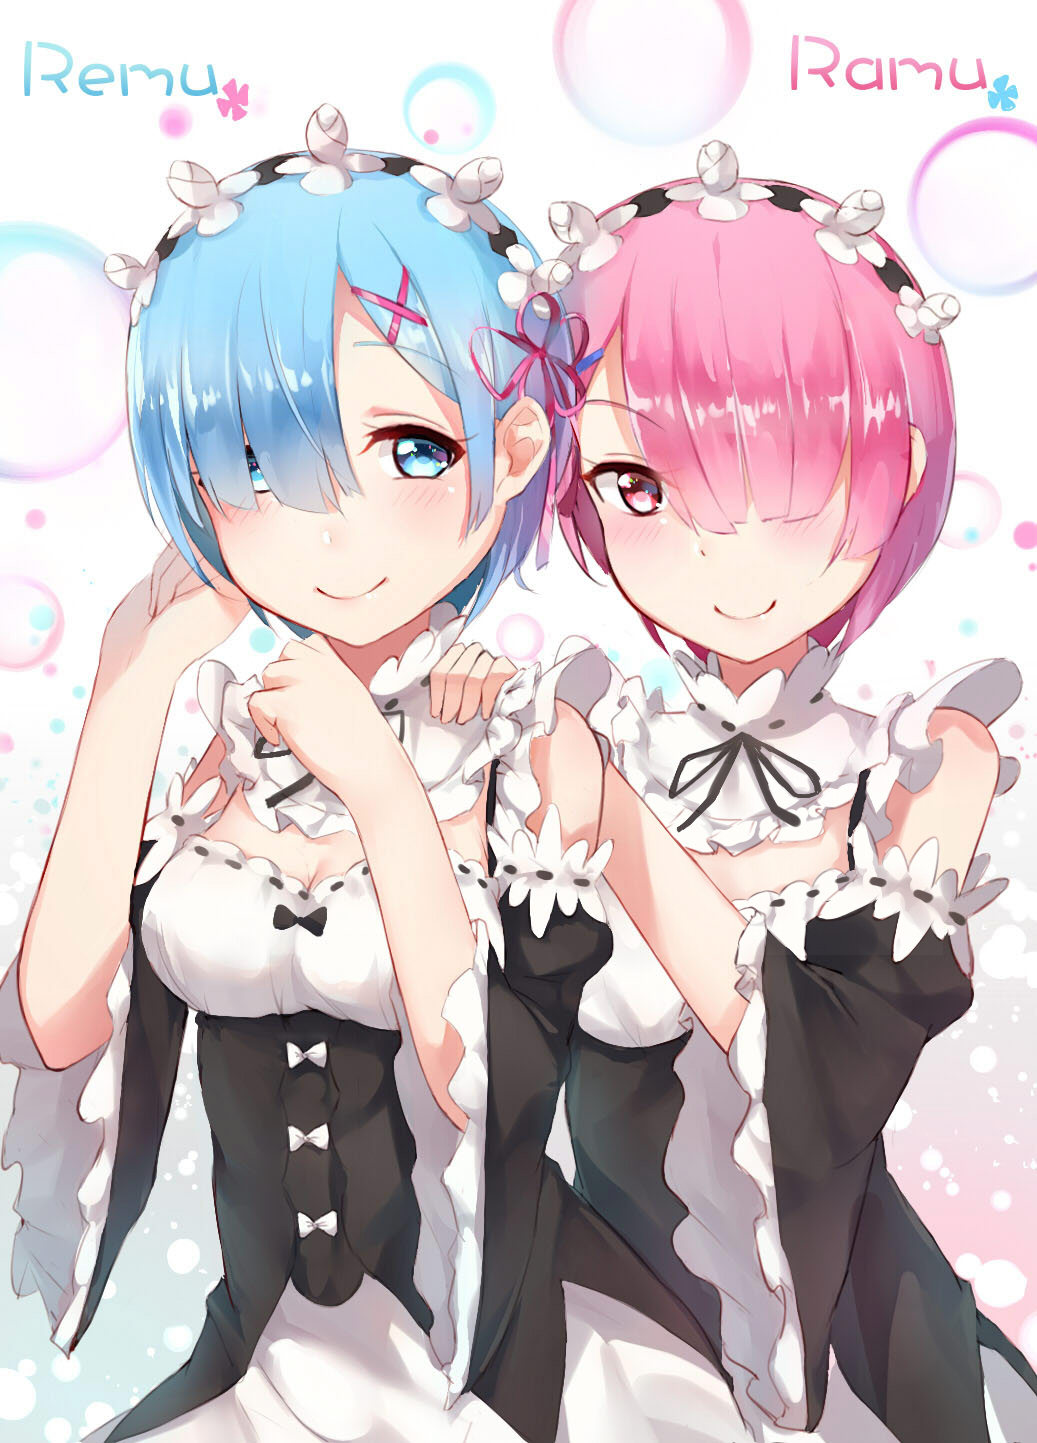 Anime 1037x1443 Rem (Re:Zero) Ram (Re: Zero) Re:Zero Kara Hajimeru Isekai Seikatsu anime anime girls twins blue hair pink hair maid maid outfit